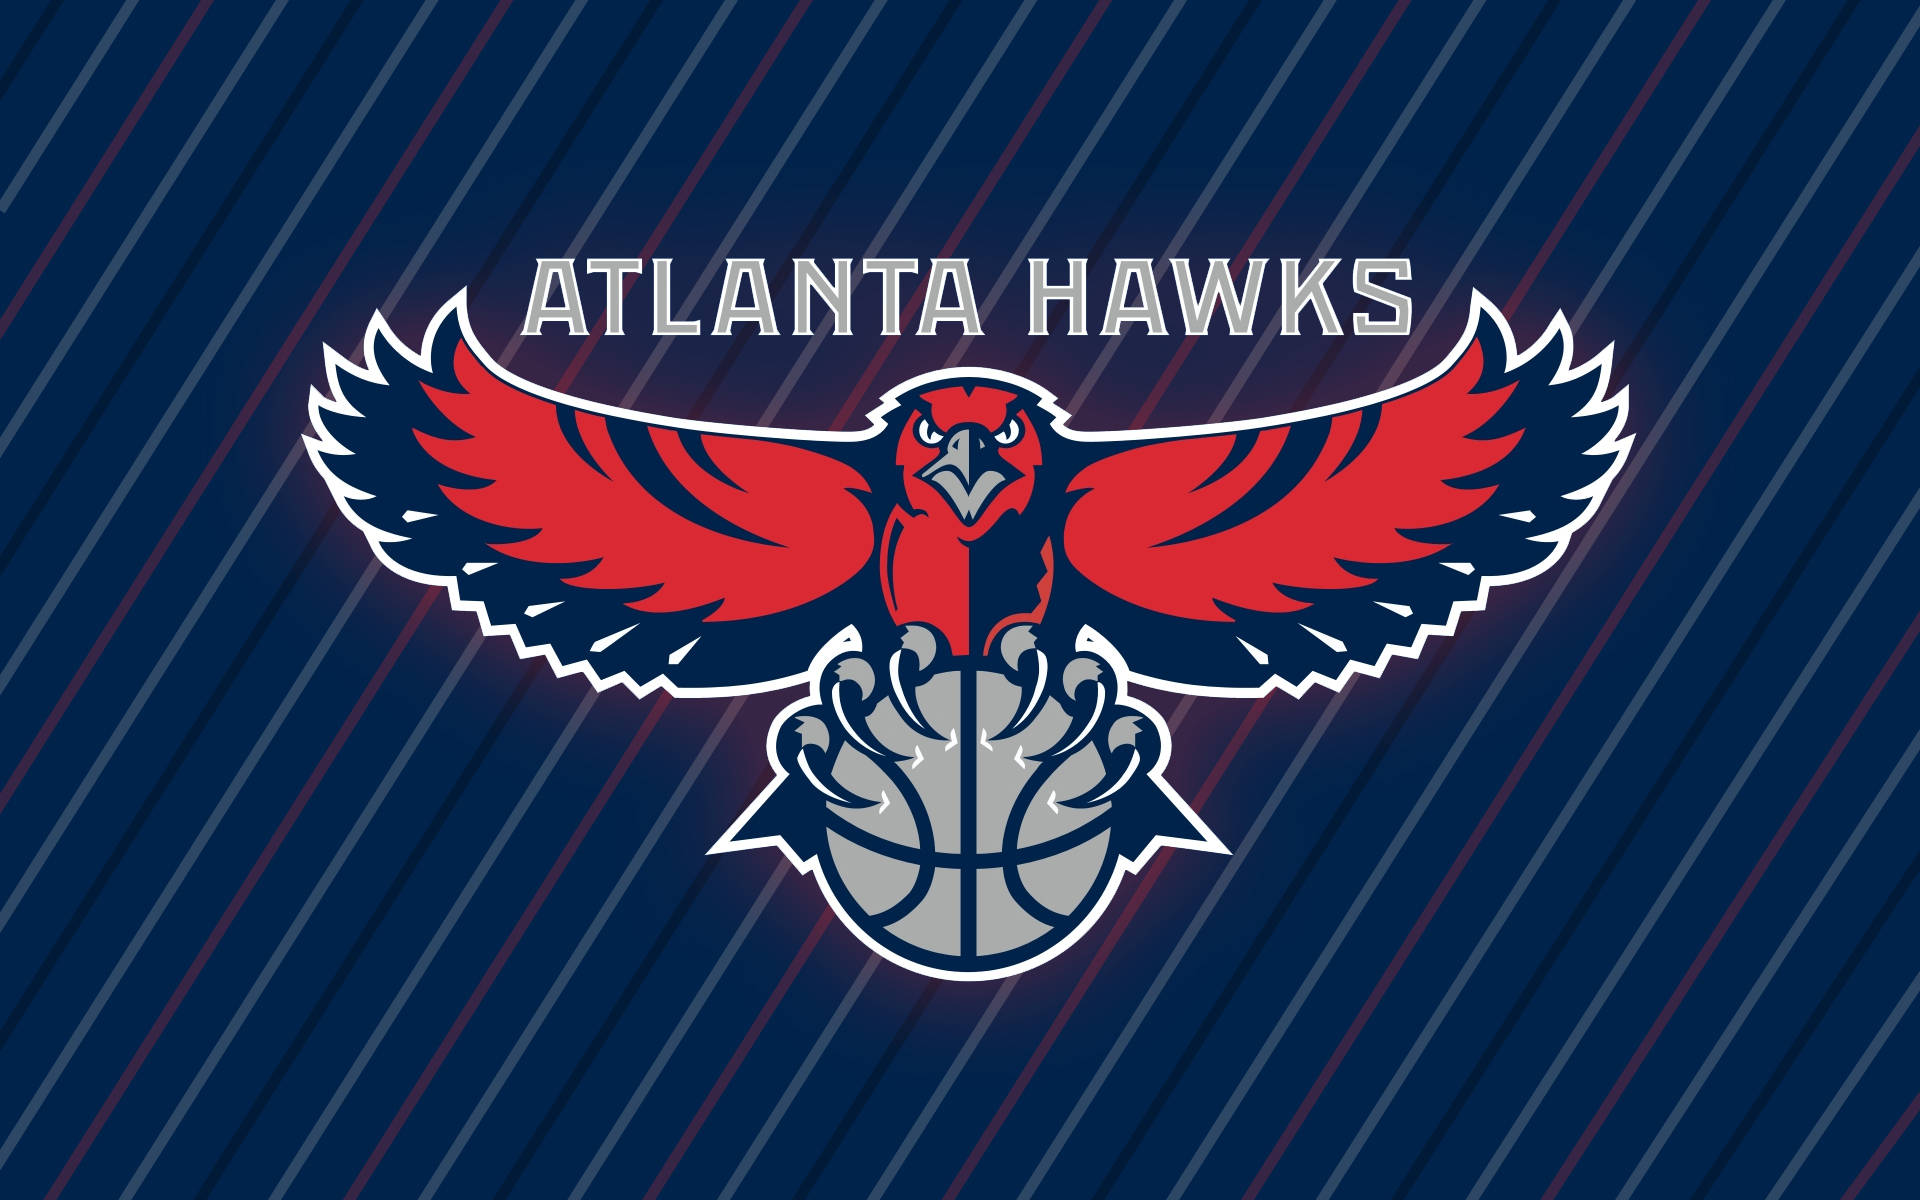 Top 999+ Atlanta Hawks Wallpaper Full HD, 4K Free to Use